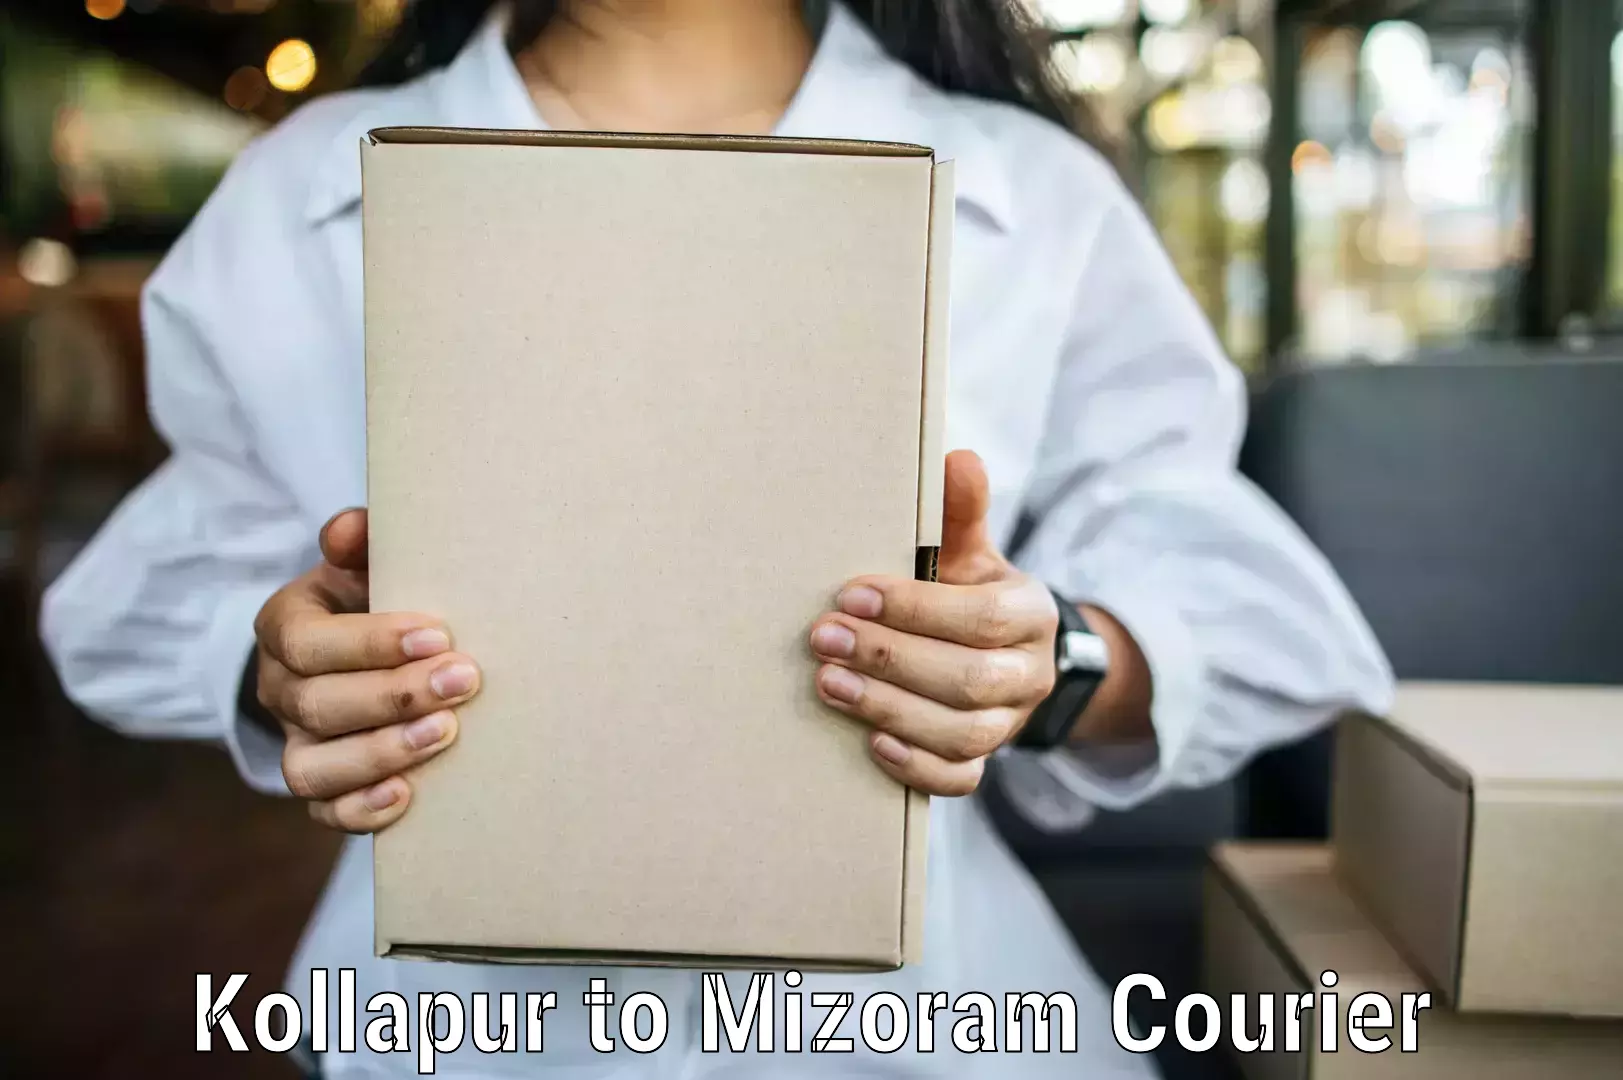 Courier service partnerships Kollapur to Mizoram